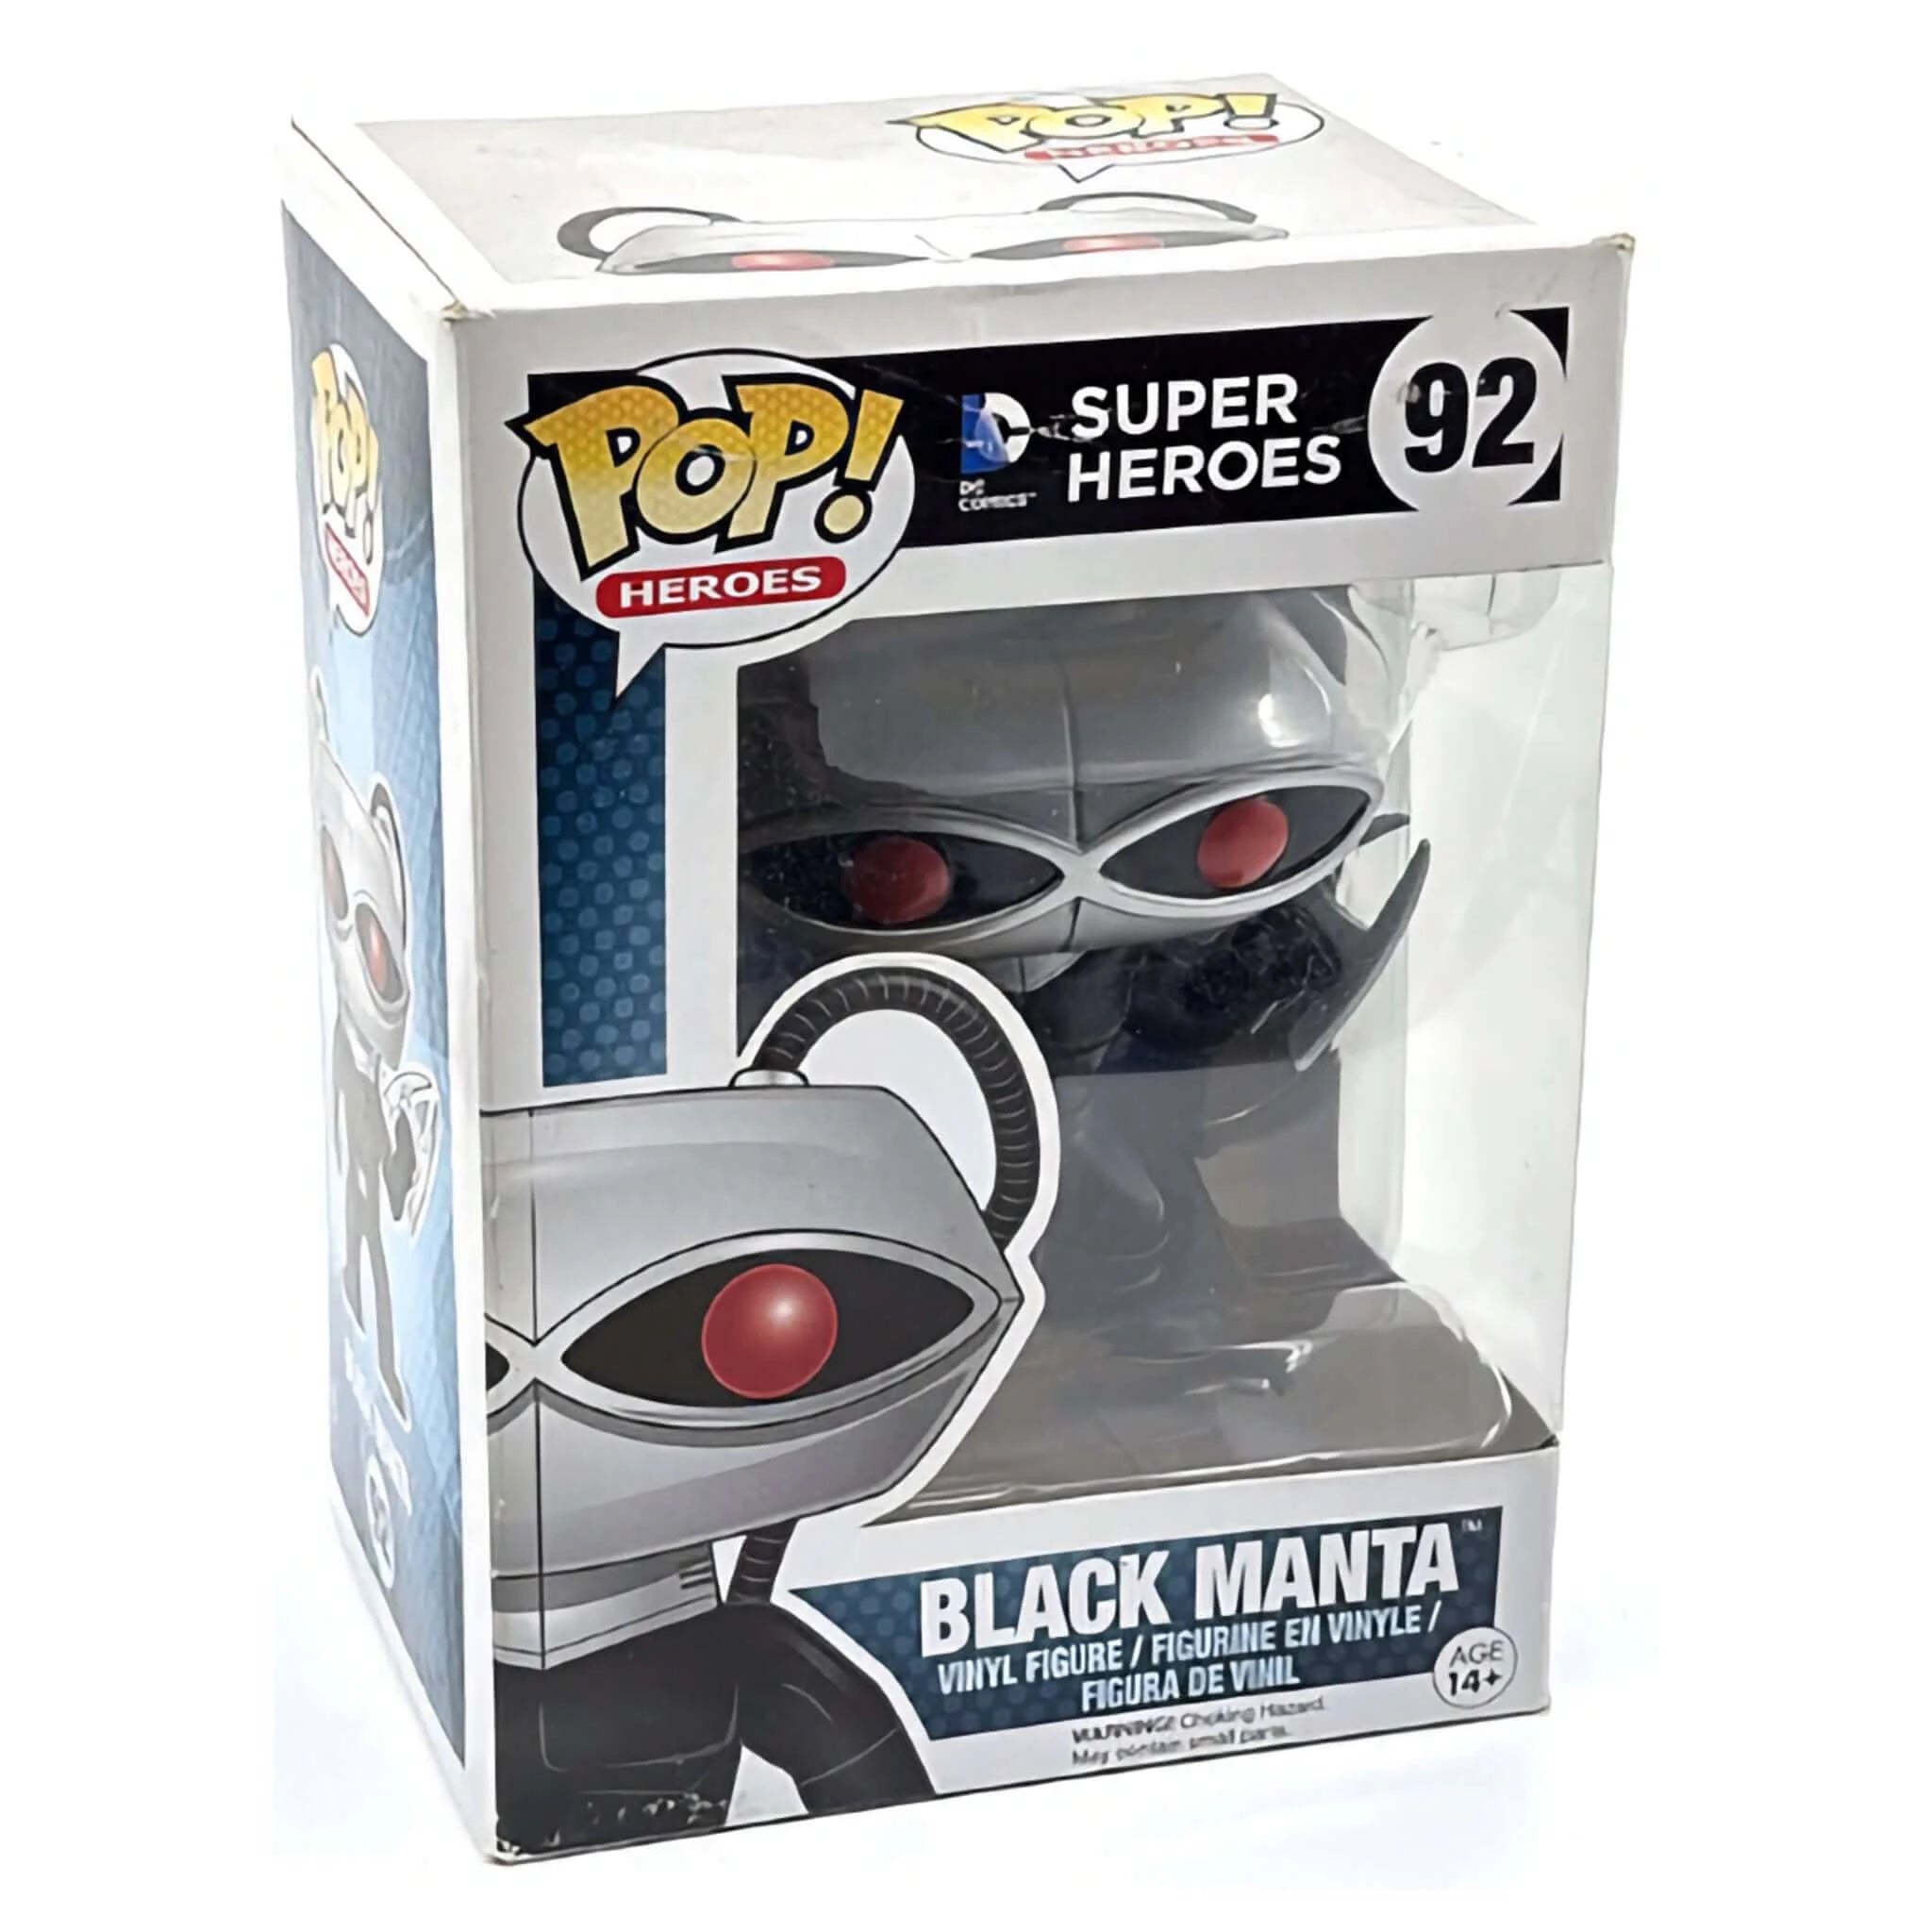 Black Manta Funko Pop!-Jingle Truck Toys